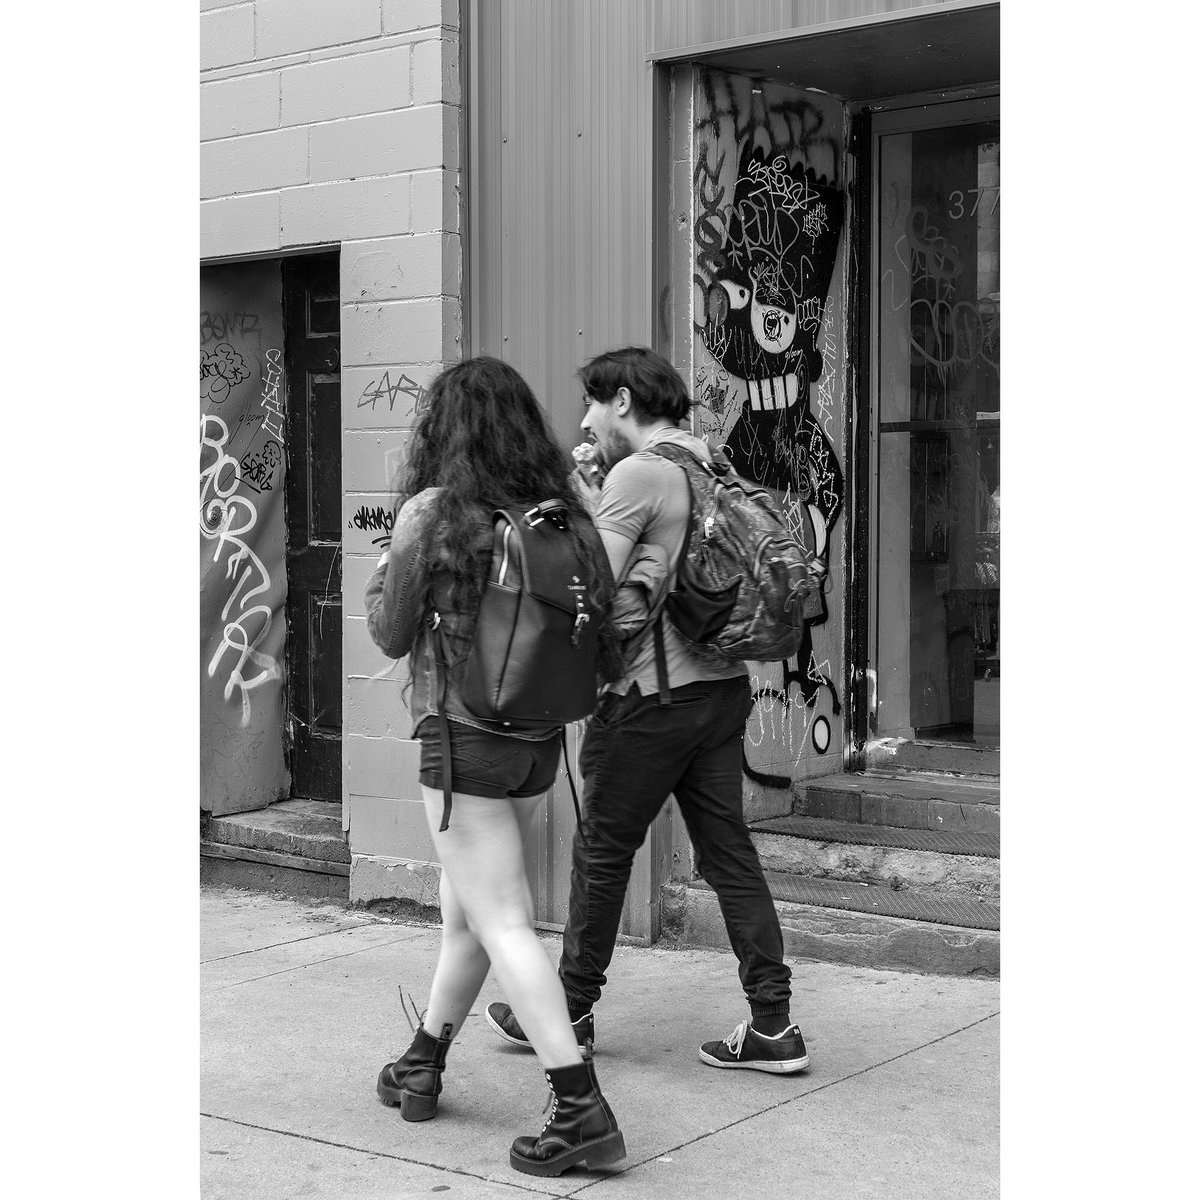 #Montreal #streetphoto on a sidewalk📷😊
 
Scène de rue sur un trottoir de #Montréal ☮️❤️
 
louiseverdonephotos.ca
 
#streetphotography #blackandwhitephotography #urbanphotography #BW_streetphotography #monochromephotography #bnwphotography #everything_bnw #everybodystreet #bnw